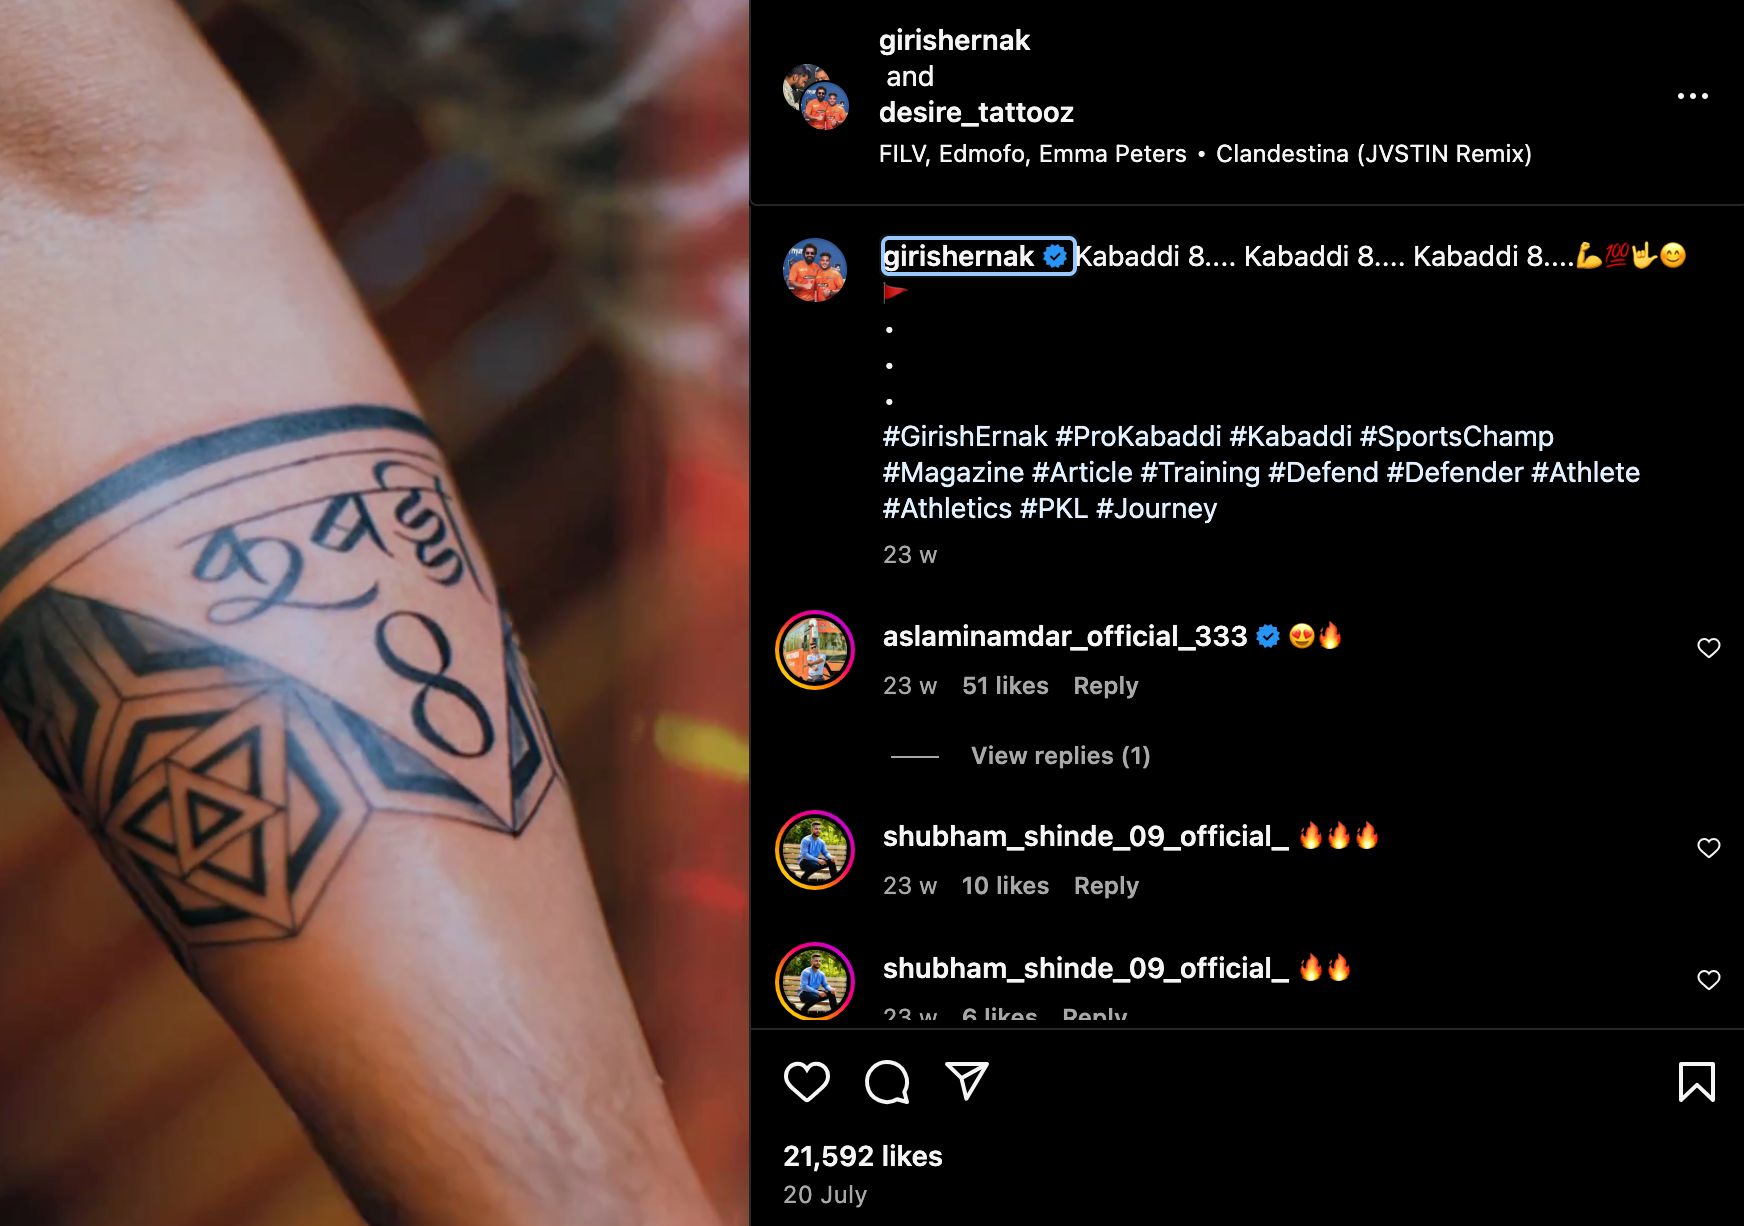 Girish Maruti Ernak's tattoo on right forearm